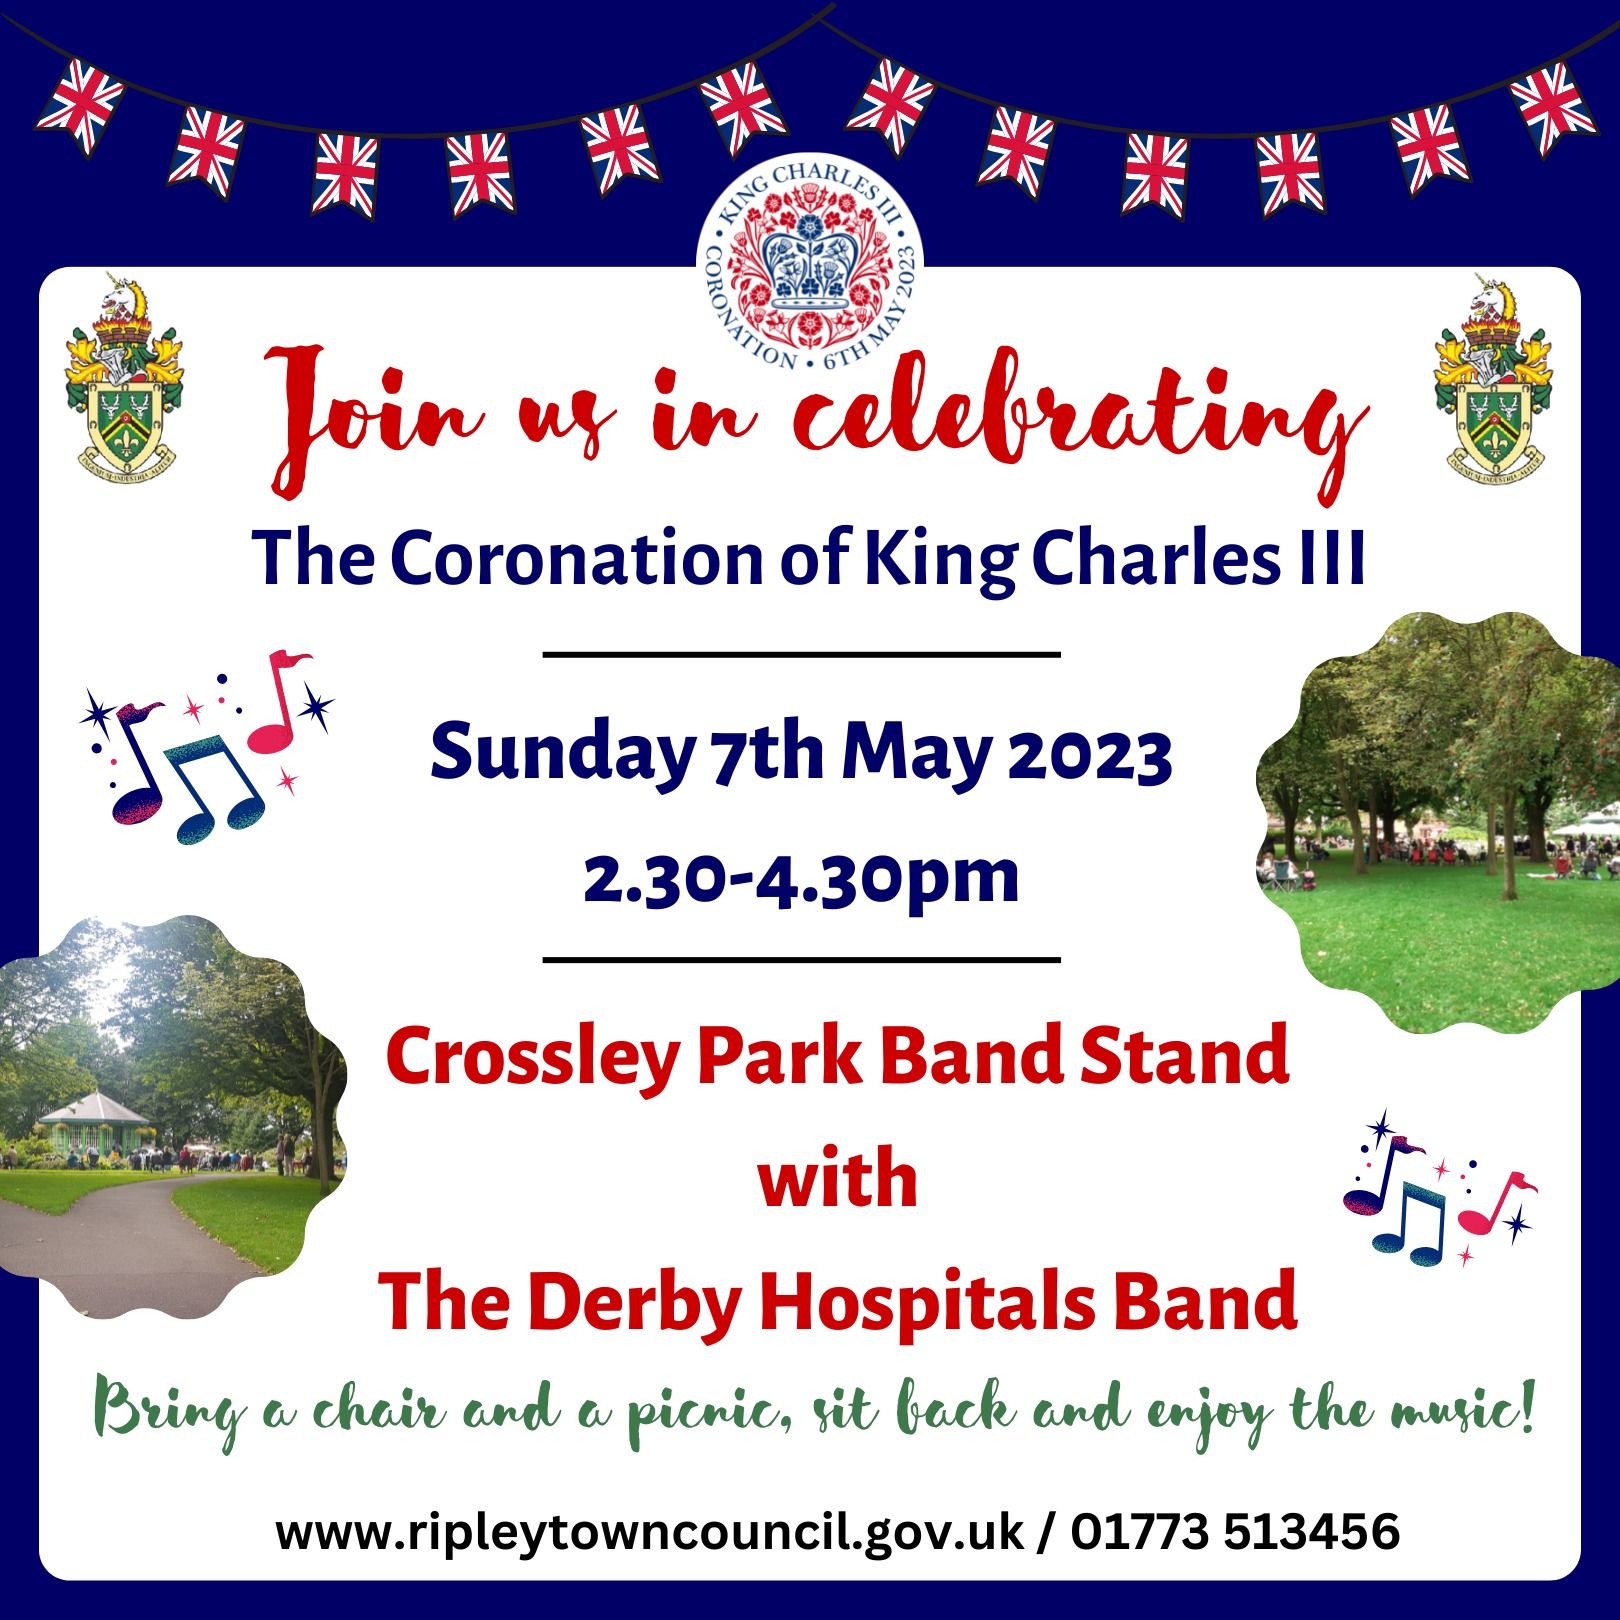 King's Coronation celebration information